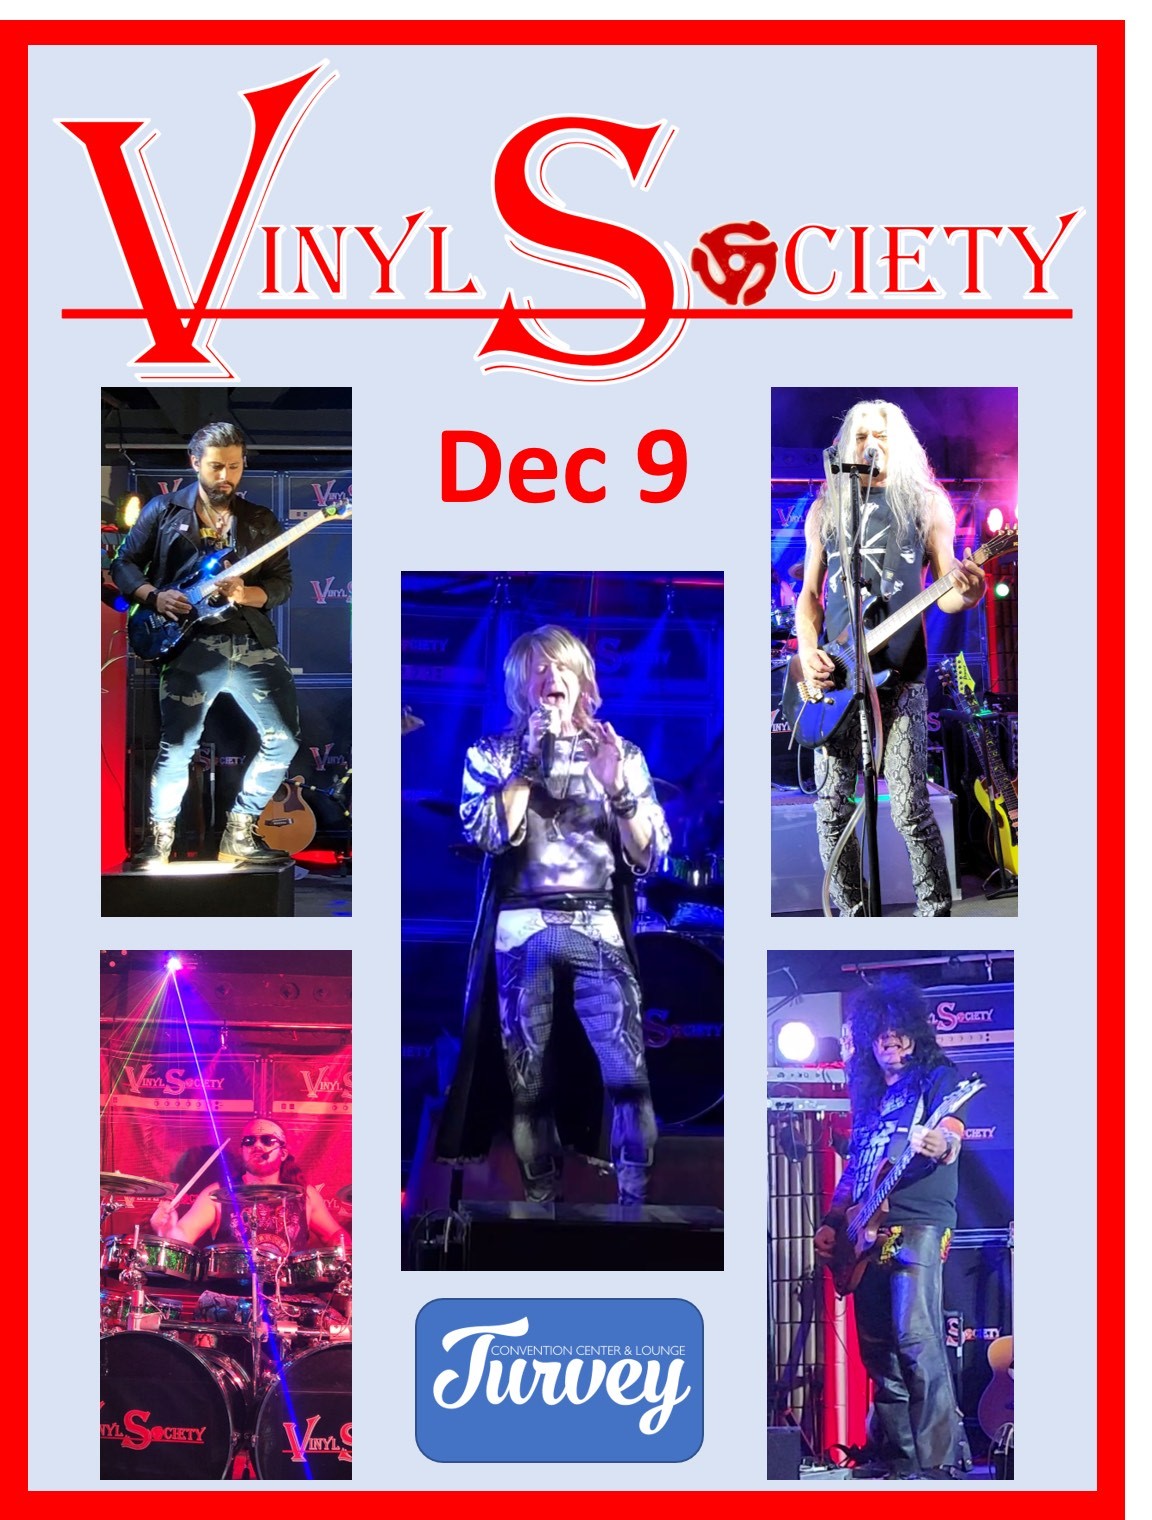 Friday Night Live Vinyl Society on dic. 09, 20:00@Turvey Convention Centre and Lounge - Compra entradas y obtén información enTurvey Convention Center 